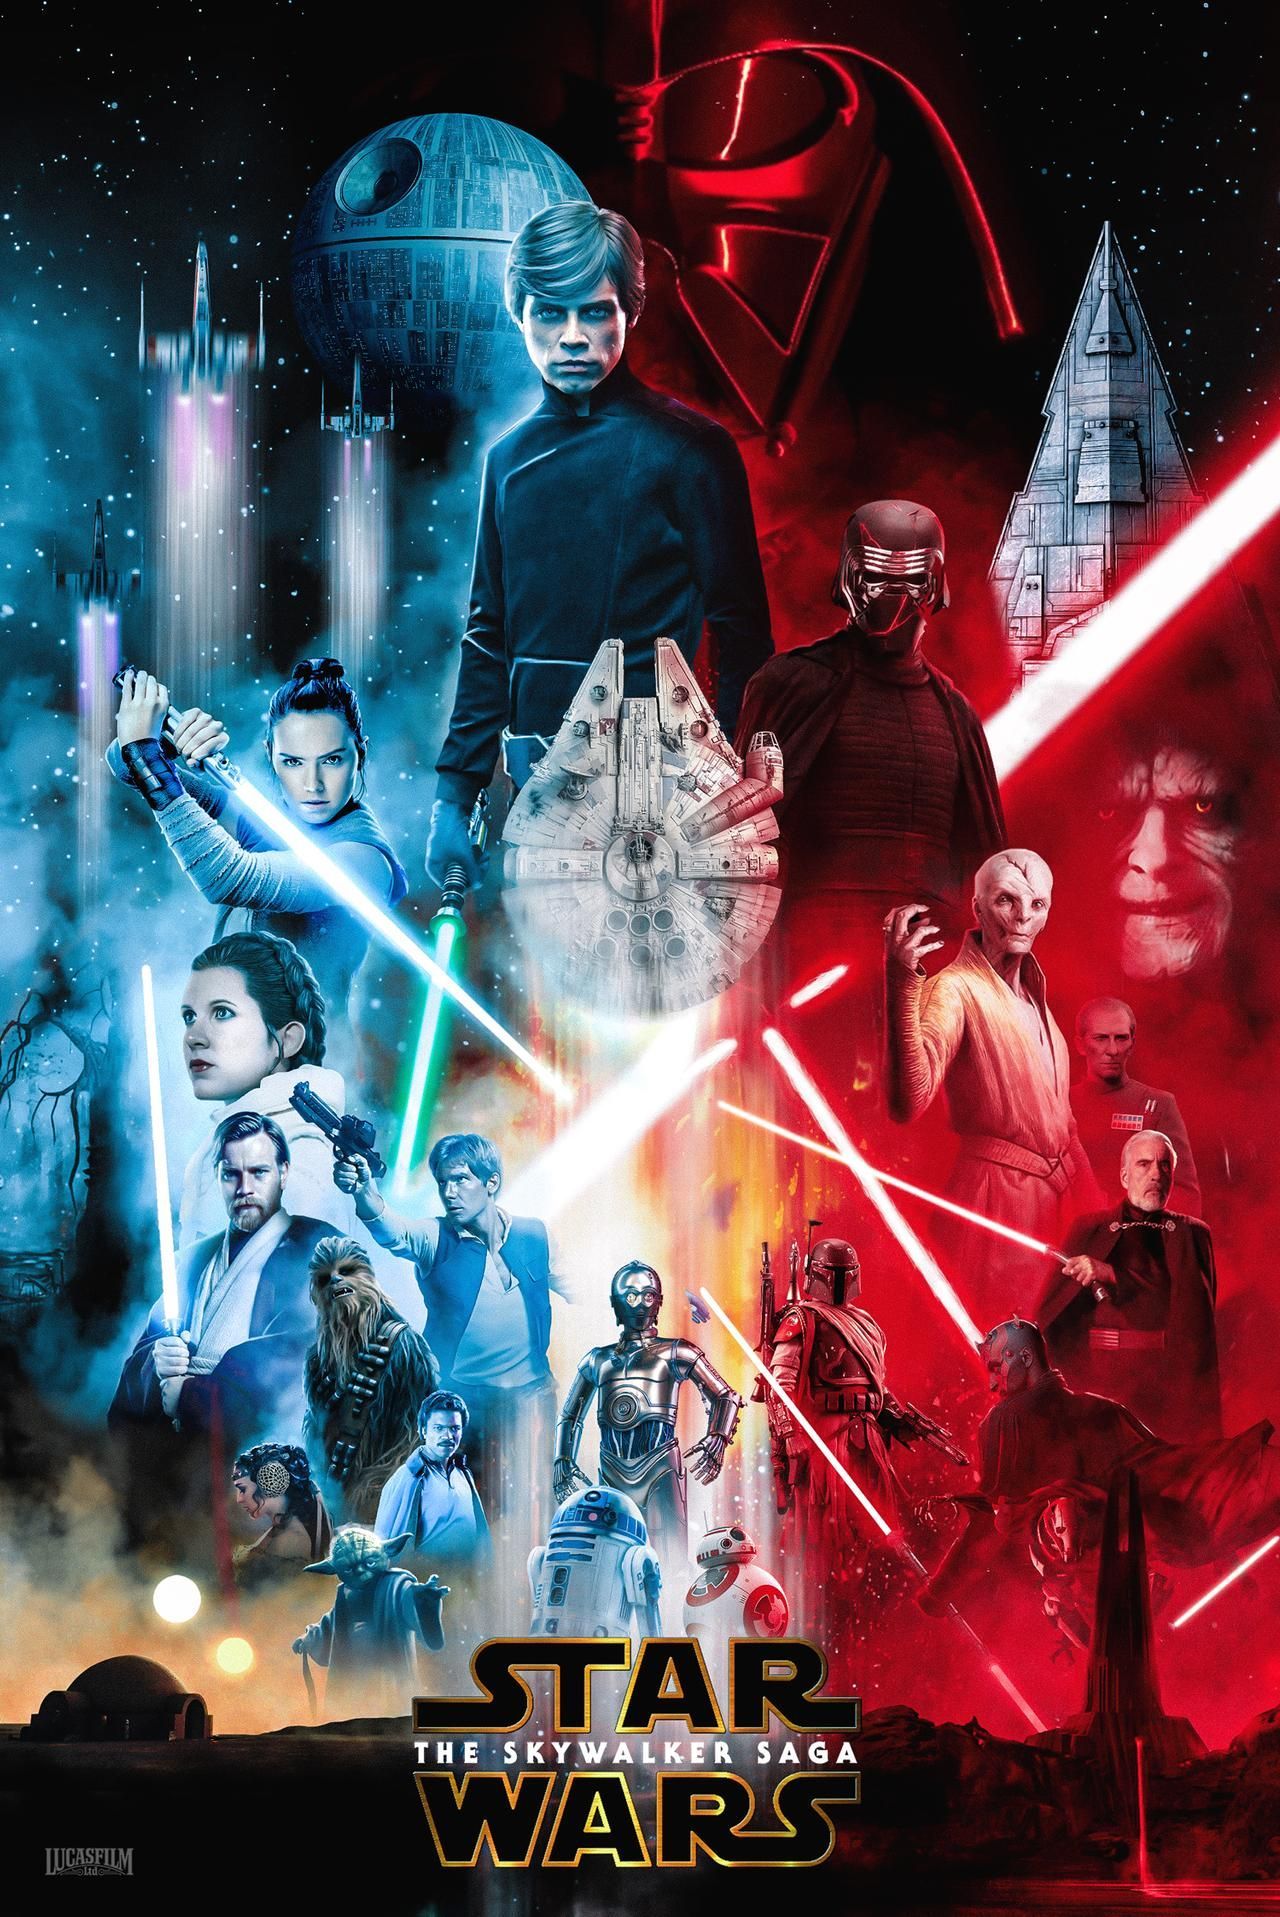 Star Wars: The Skywalker Saga. Star wars movies posters, Star wars picture, Star wars background